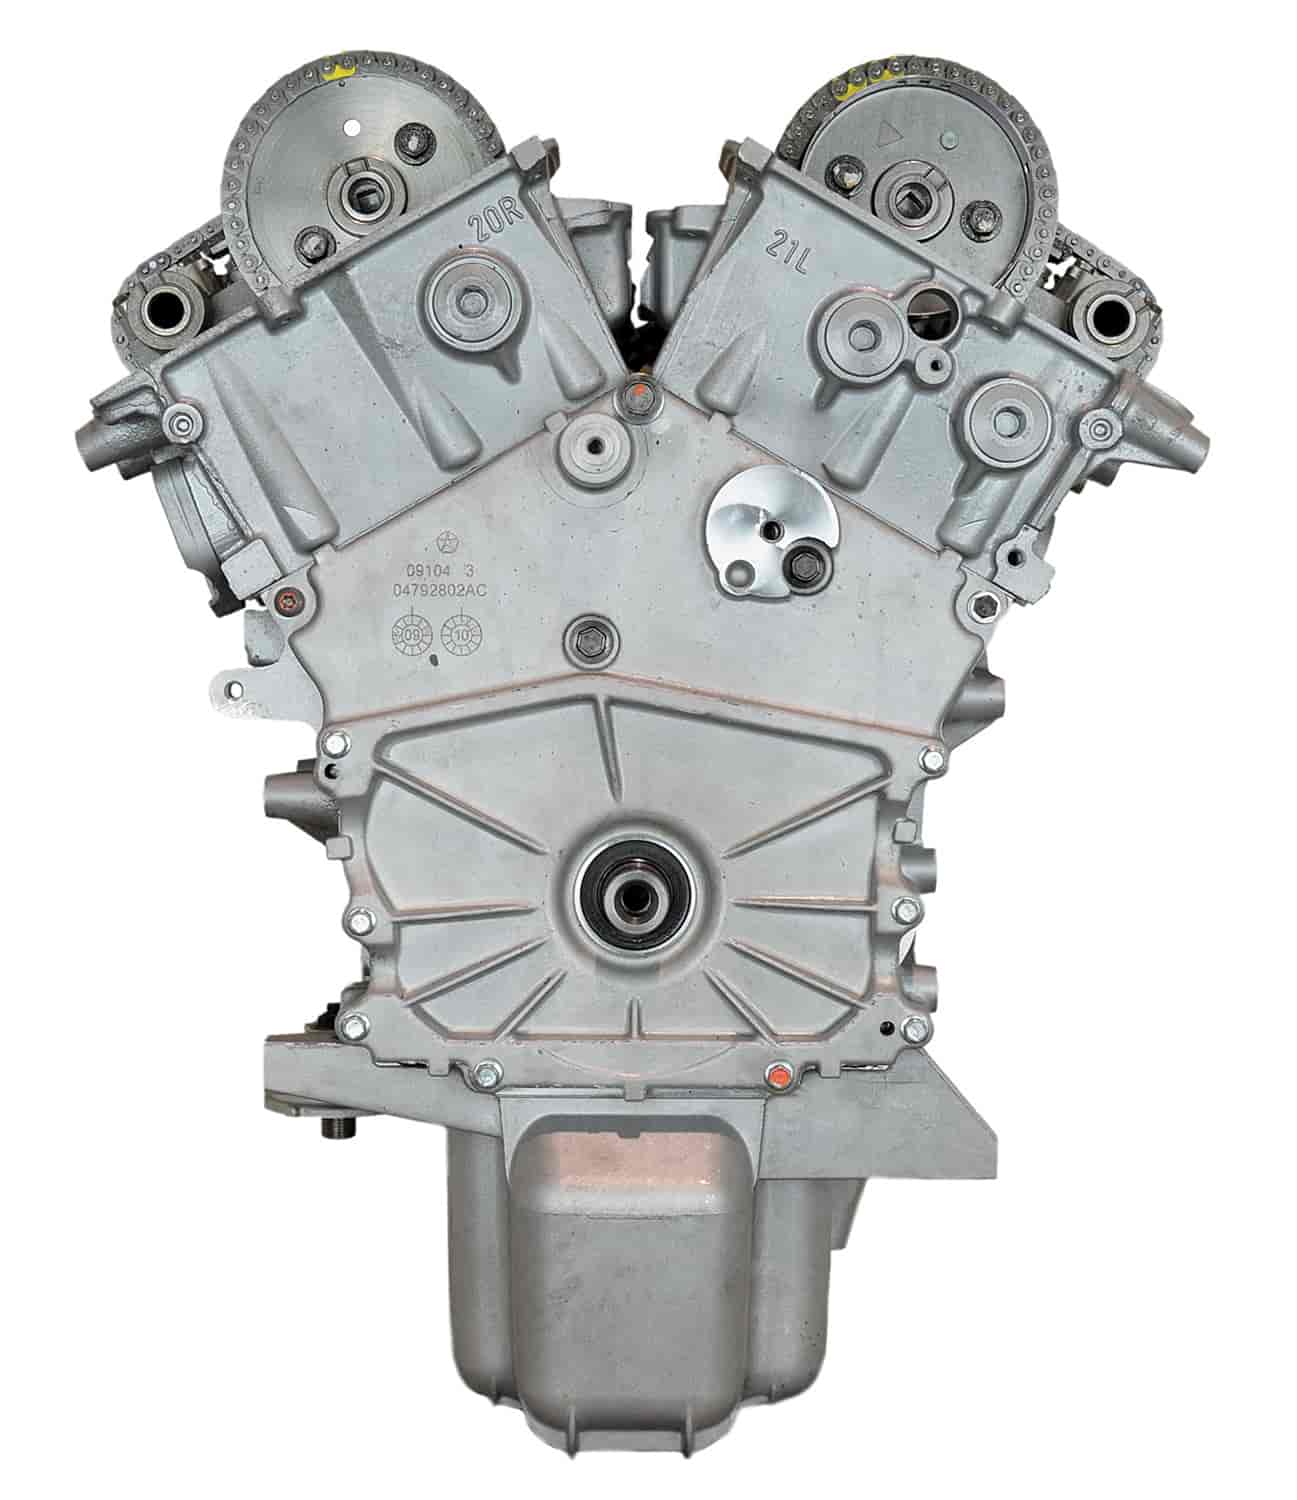 Remanufactured Crate Engine for 2006-2008 Chrysler/Dodge with 2.7L V6